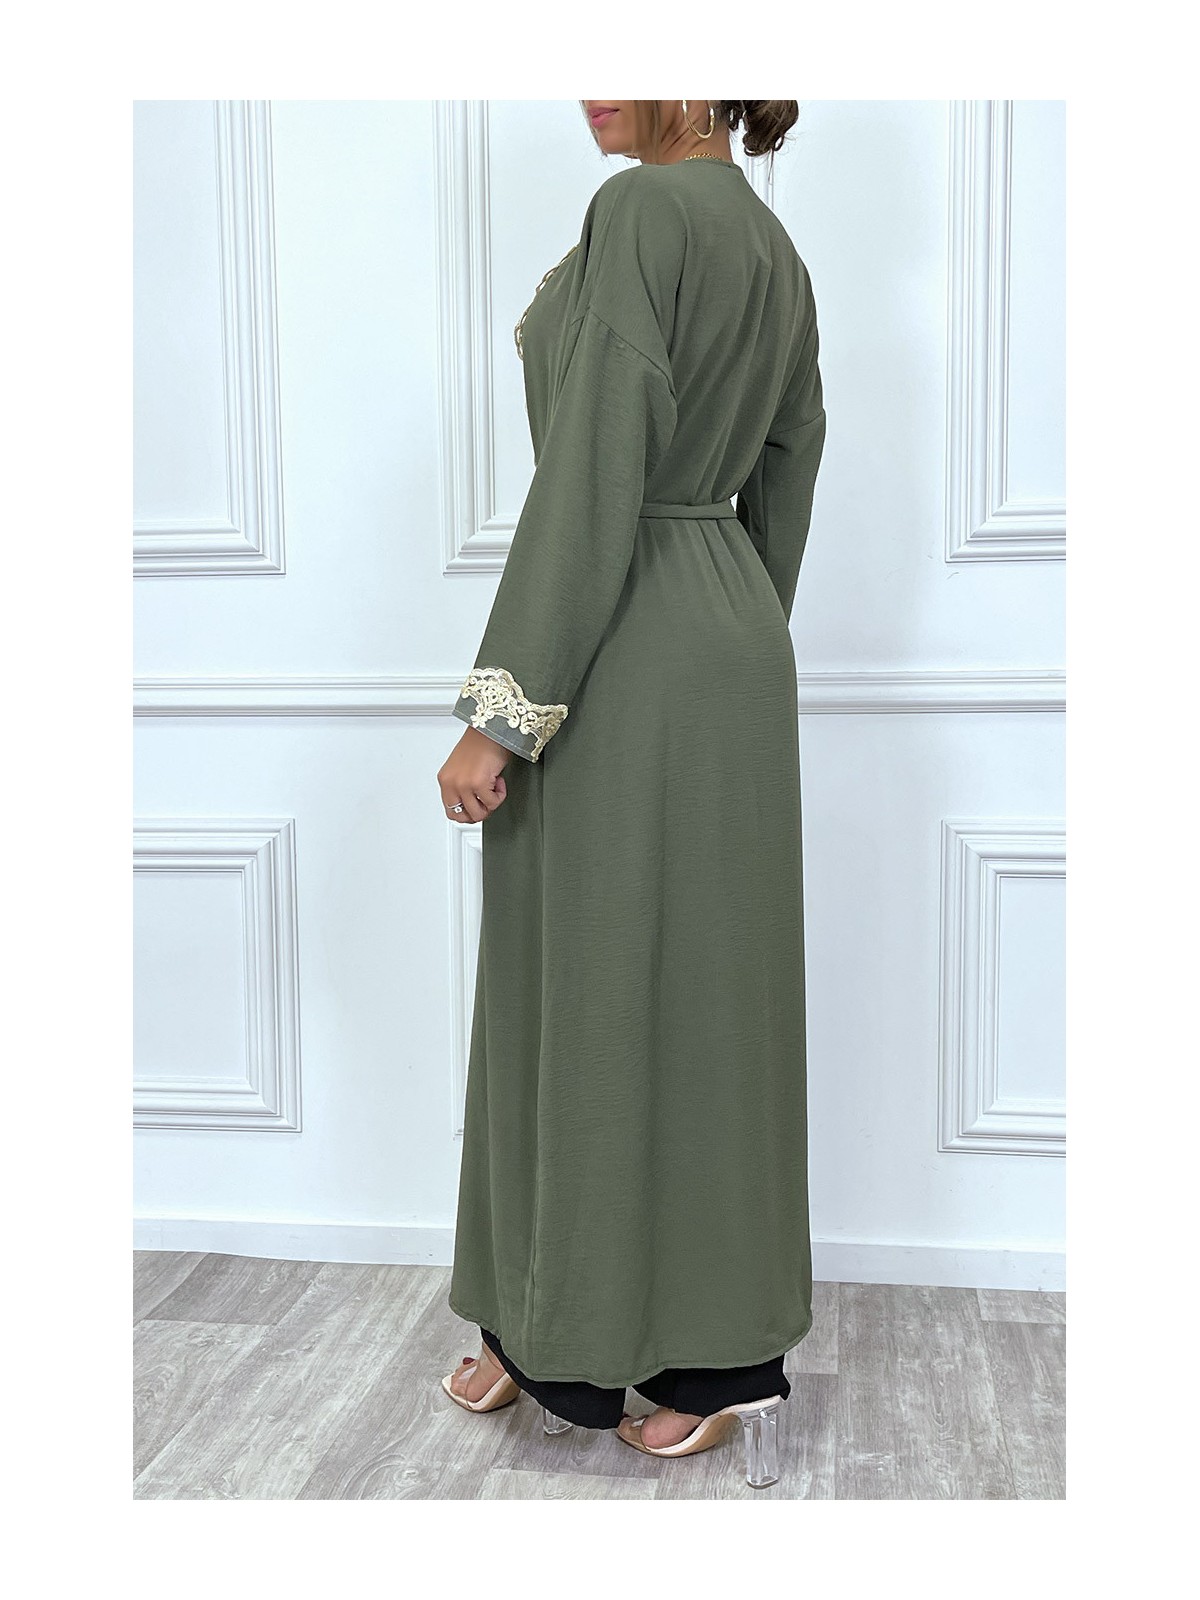 KiLKno long ceinturé style abaya kaki avec broderie doré - 3